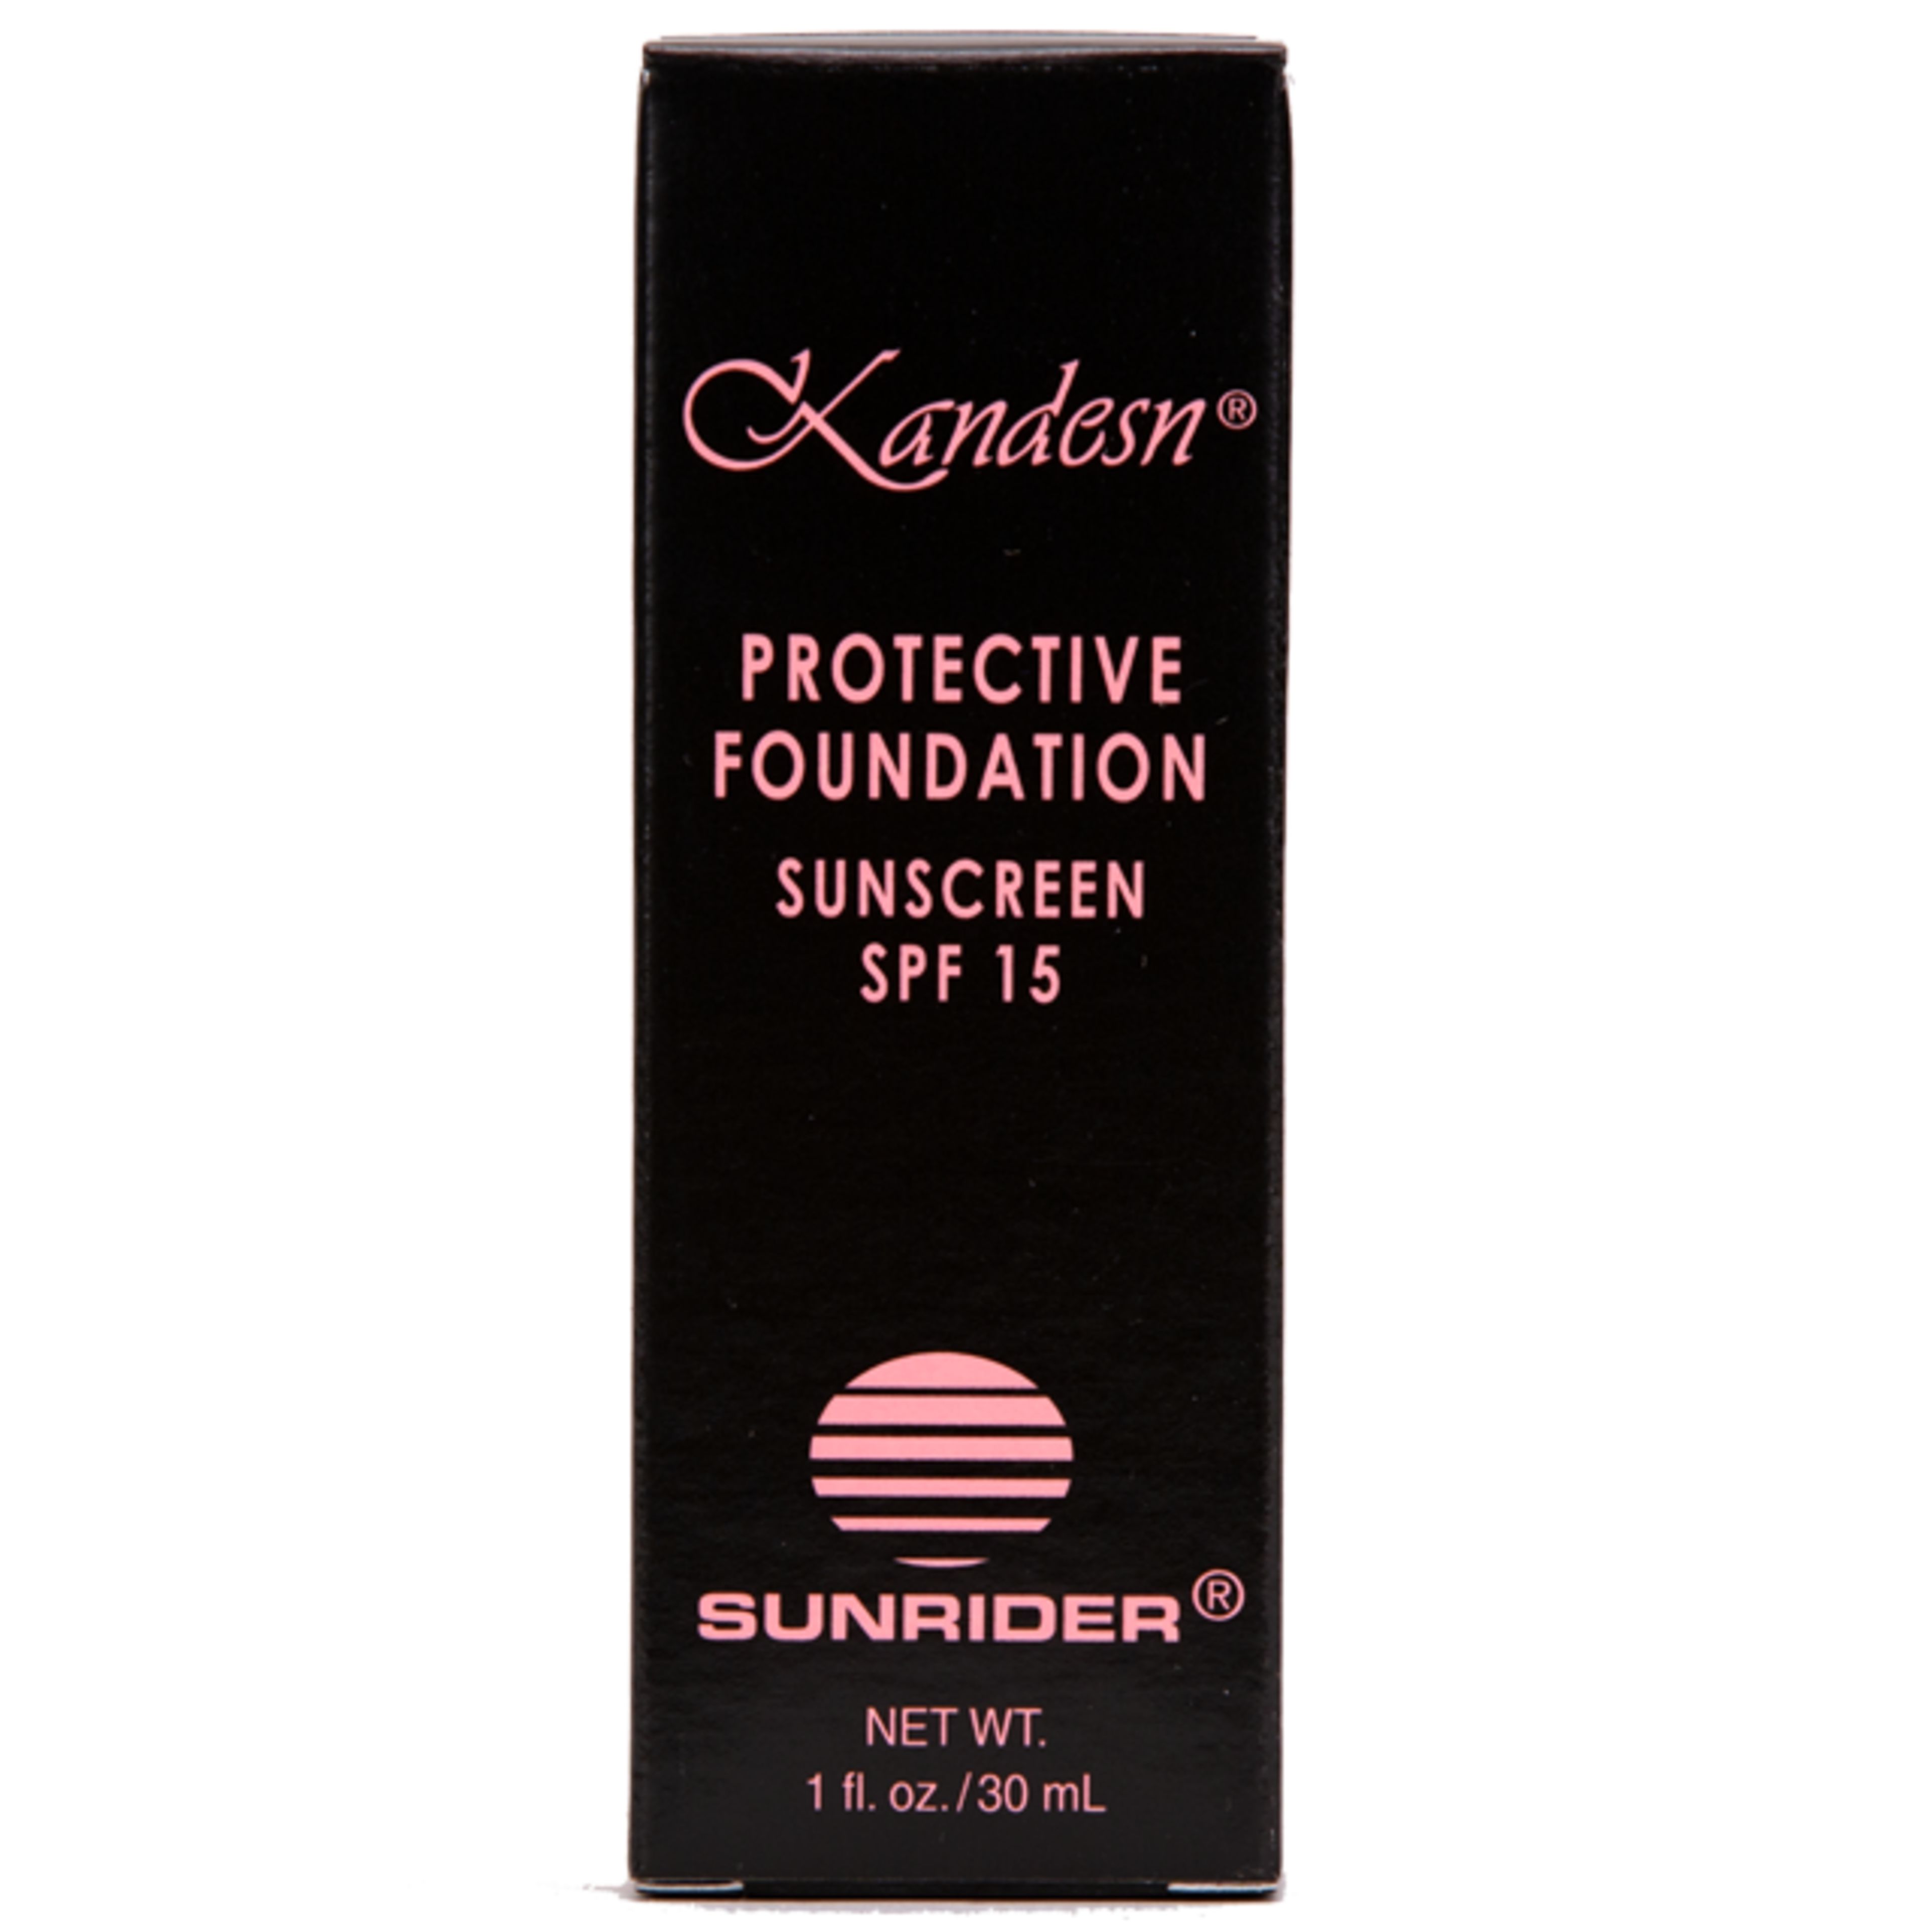 0127334-Kandesn-Protective-Foundation-Spf-15-401.png